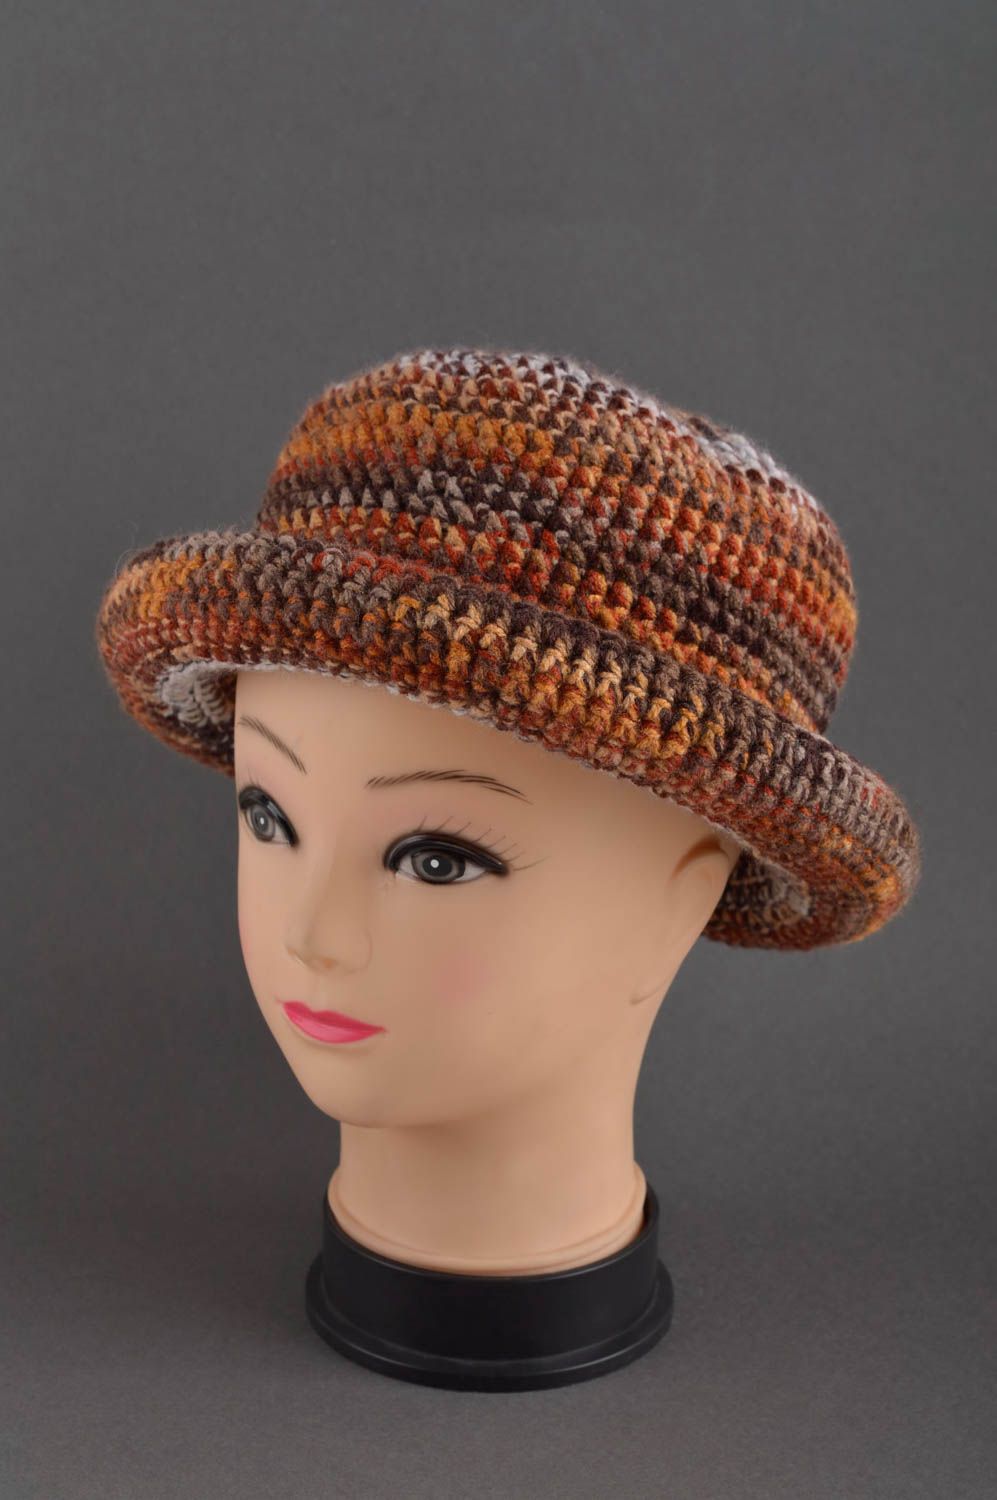 Handmade ladies hat crochet hat designer accessories fashion hats gifts for her photo 1